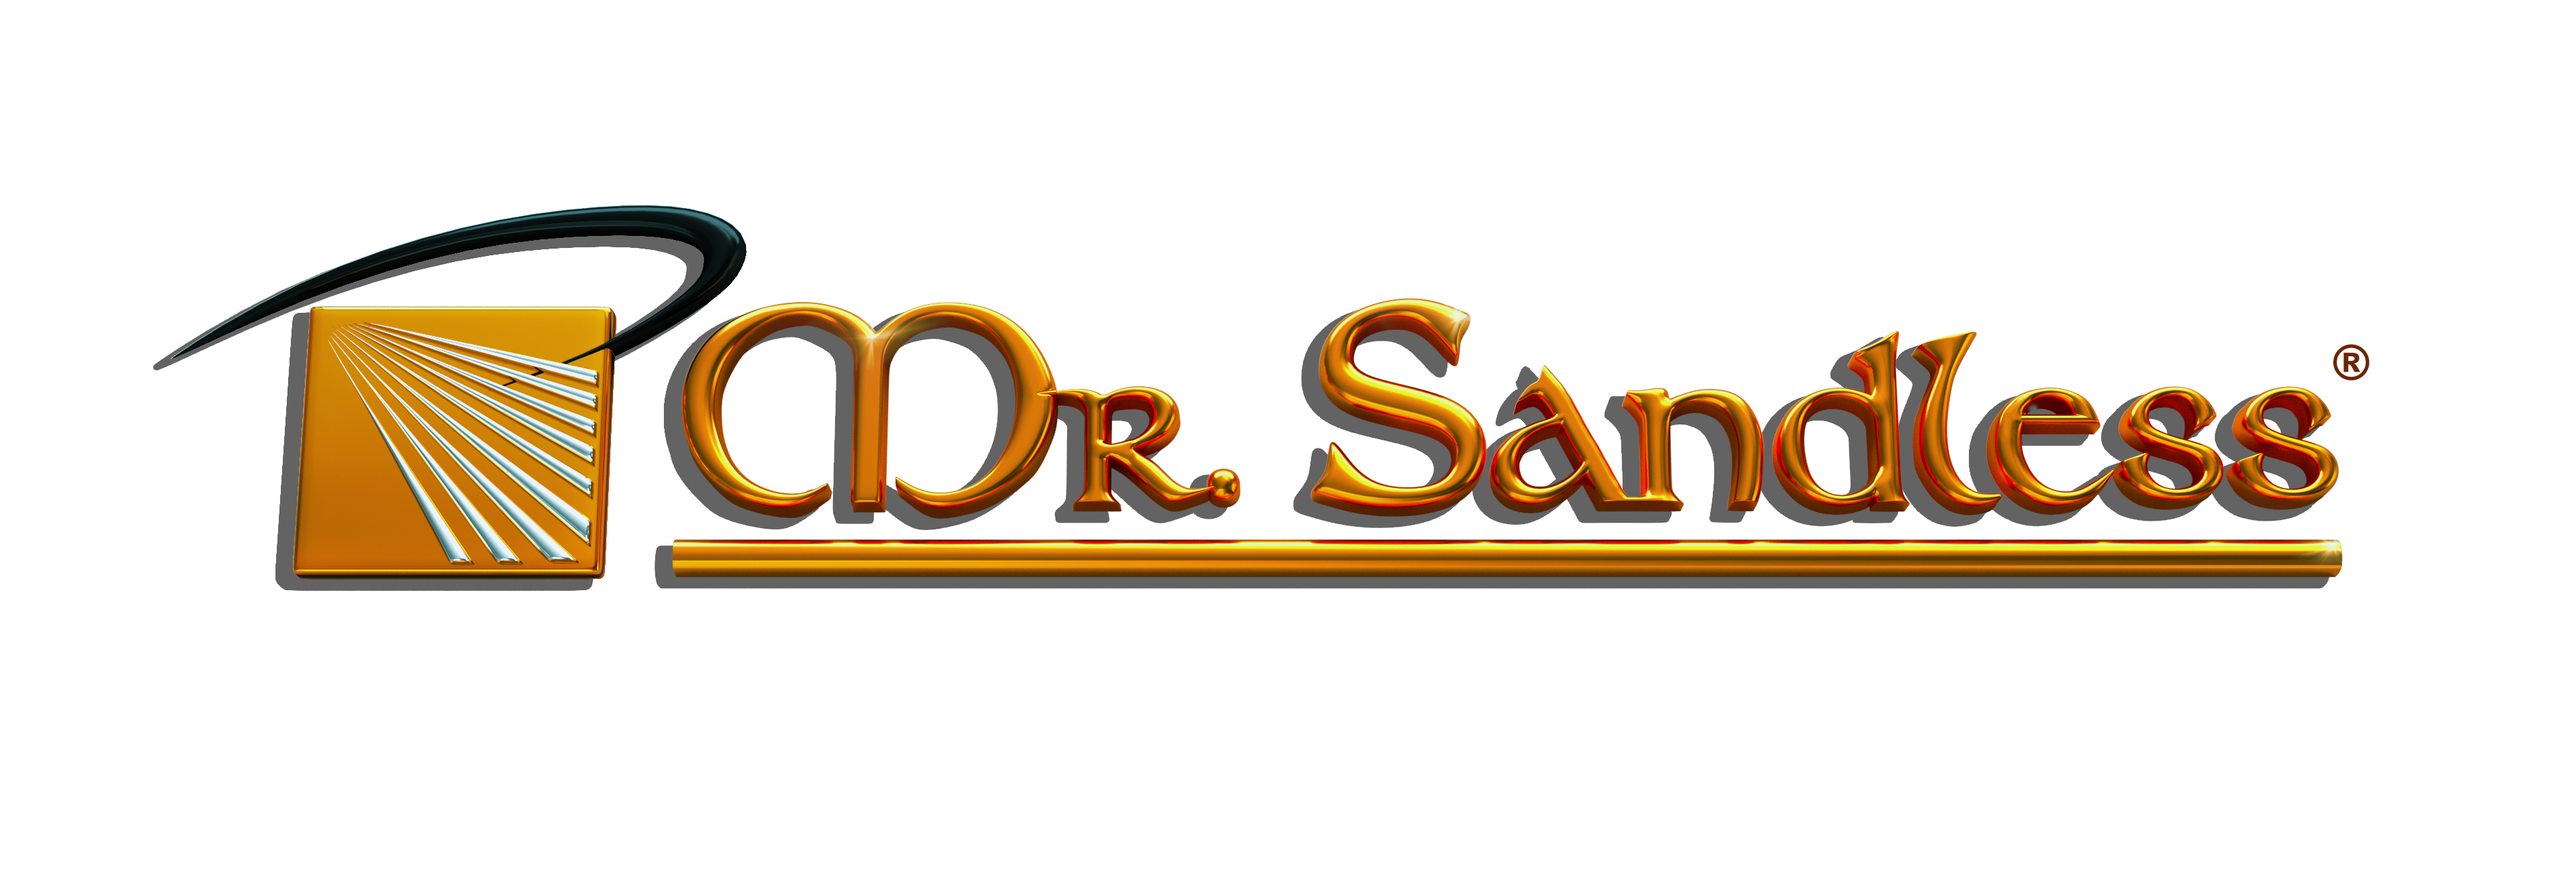 Mr. Sandless of Birmingham Logo